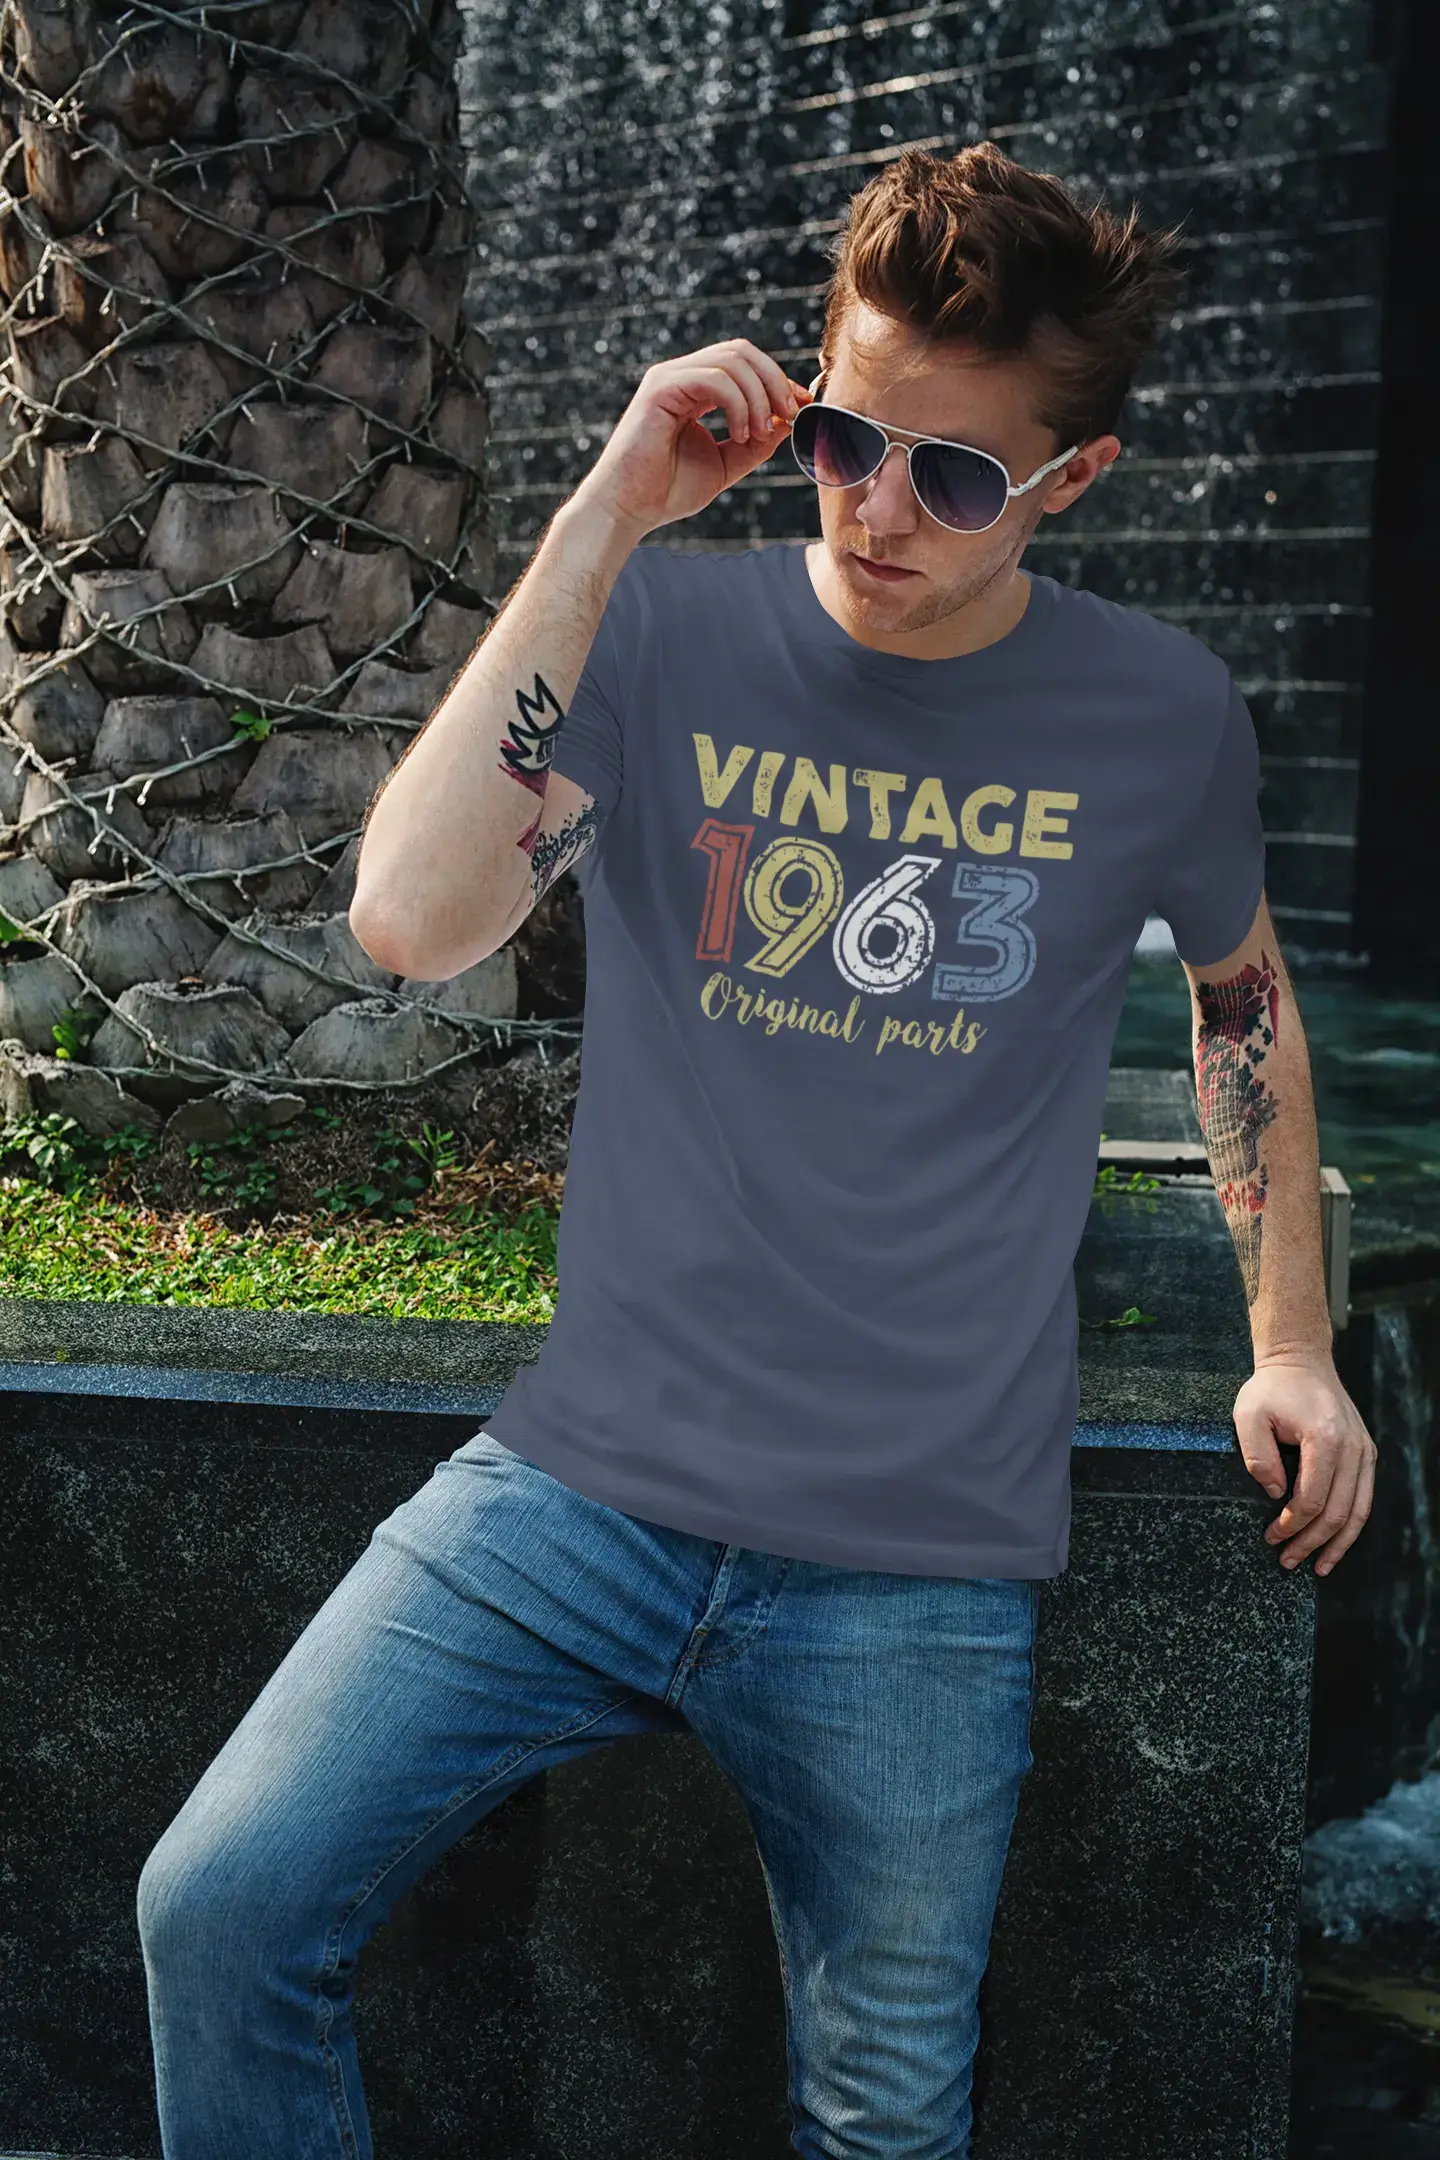 ULTRABASIC - Graphic Printed Men's Vintage 1963 T-Shirt Navy